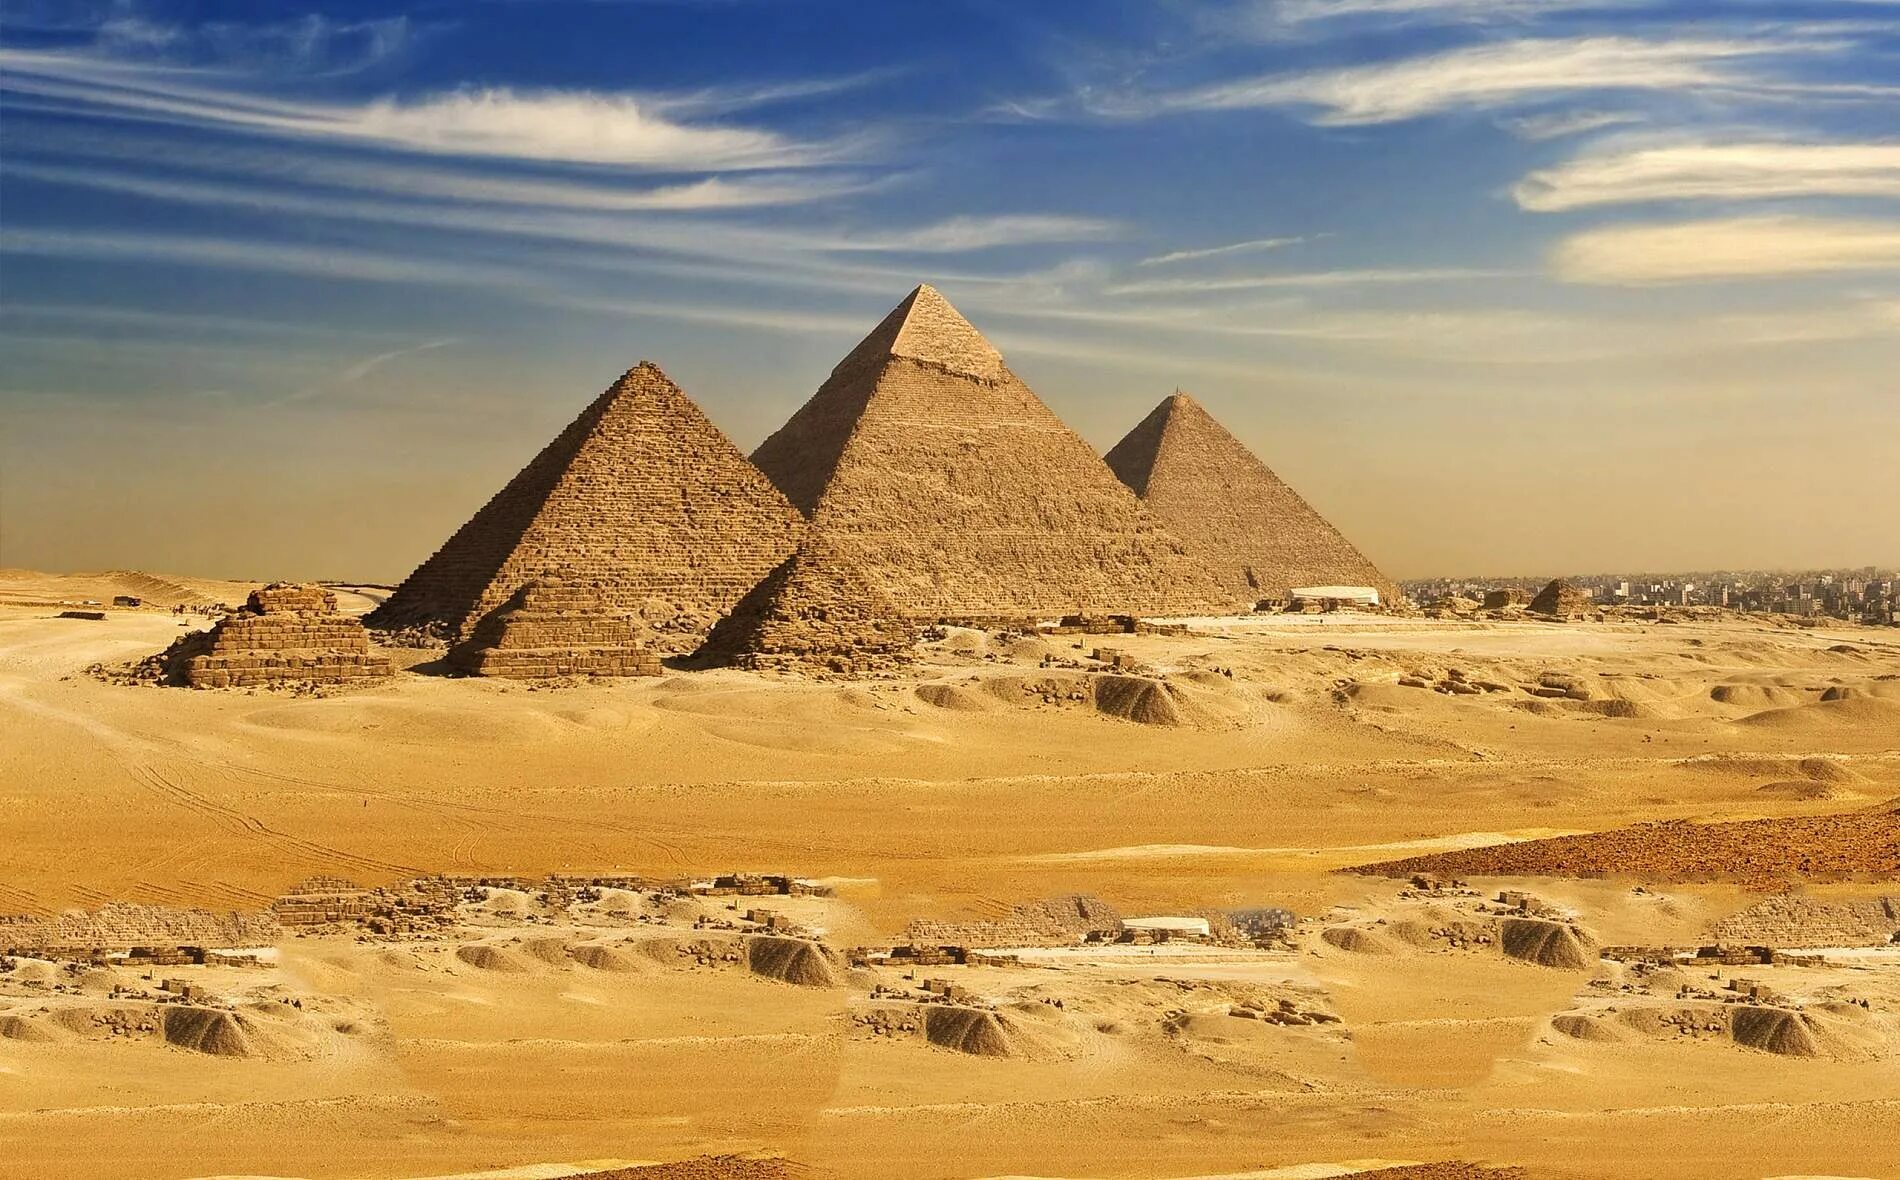 Misr piramidalari haqida. Великие пирамиды Гизы (Египет). Каир пирамиды. Пирамида Хеопса. Сфинкс Каир.